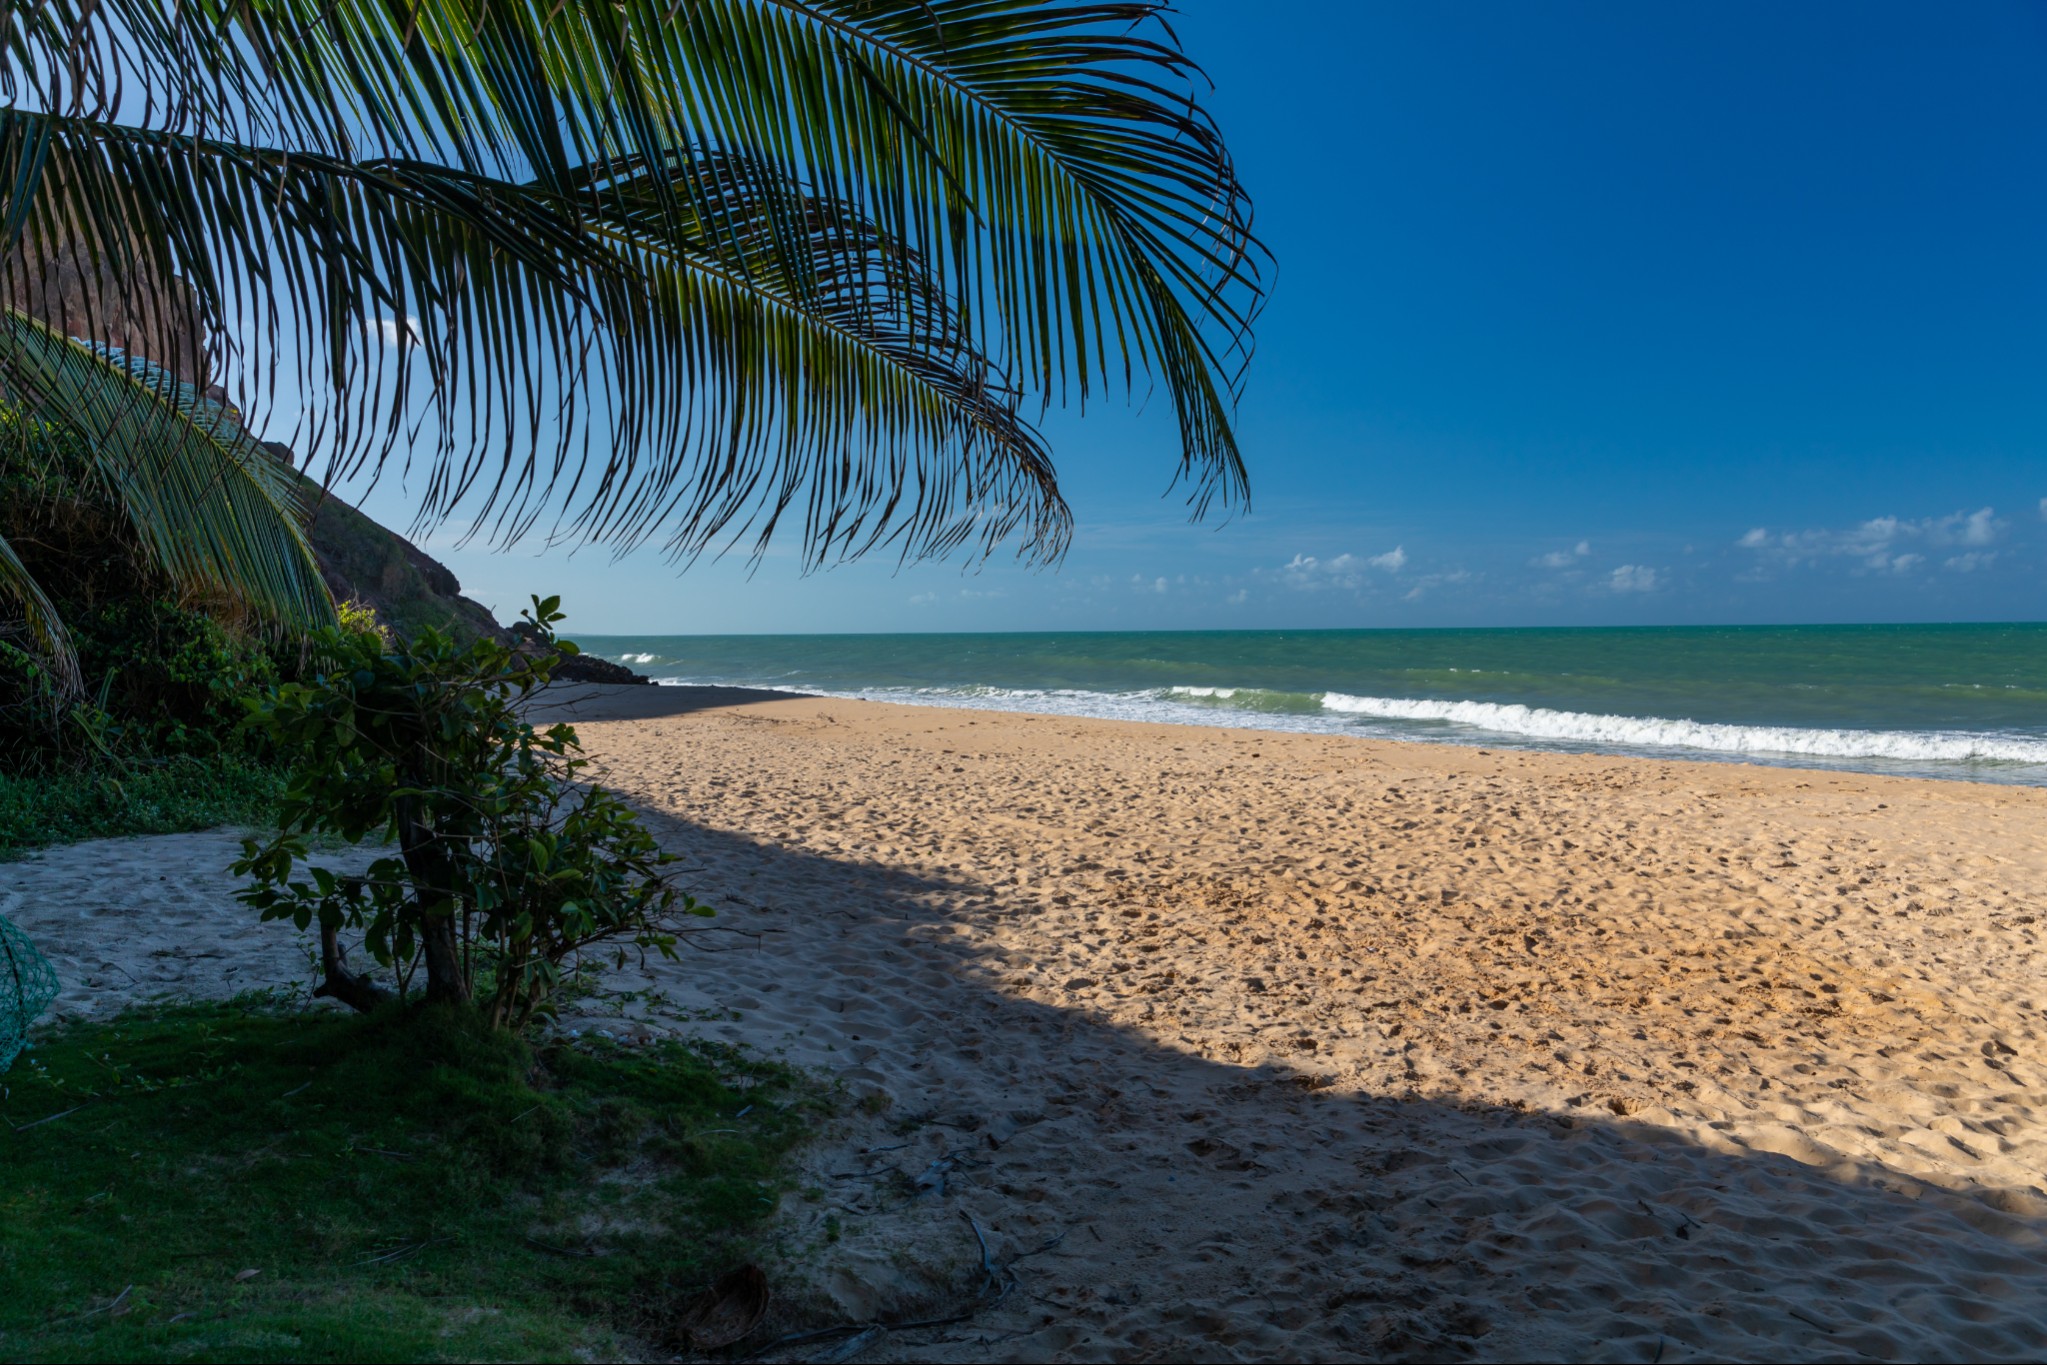 Costa do Sauipe - Salida: 2 de julio